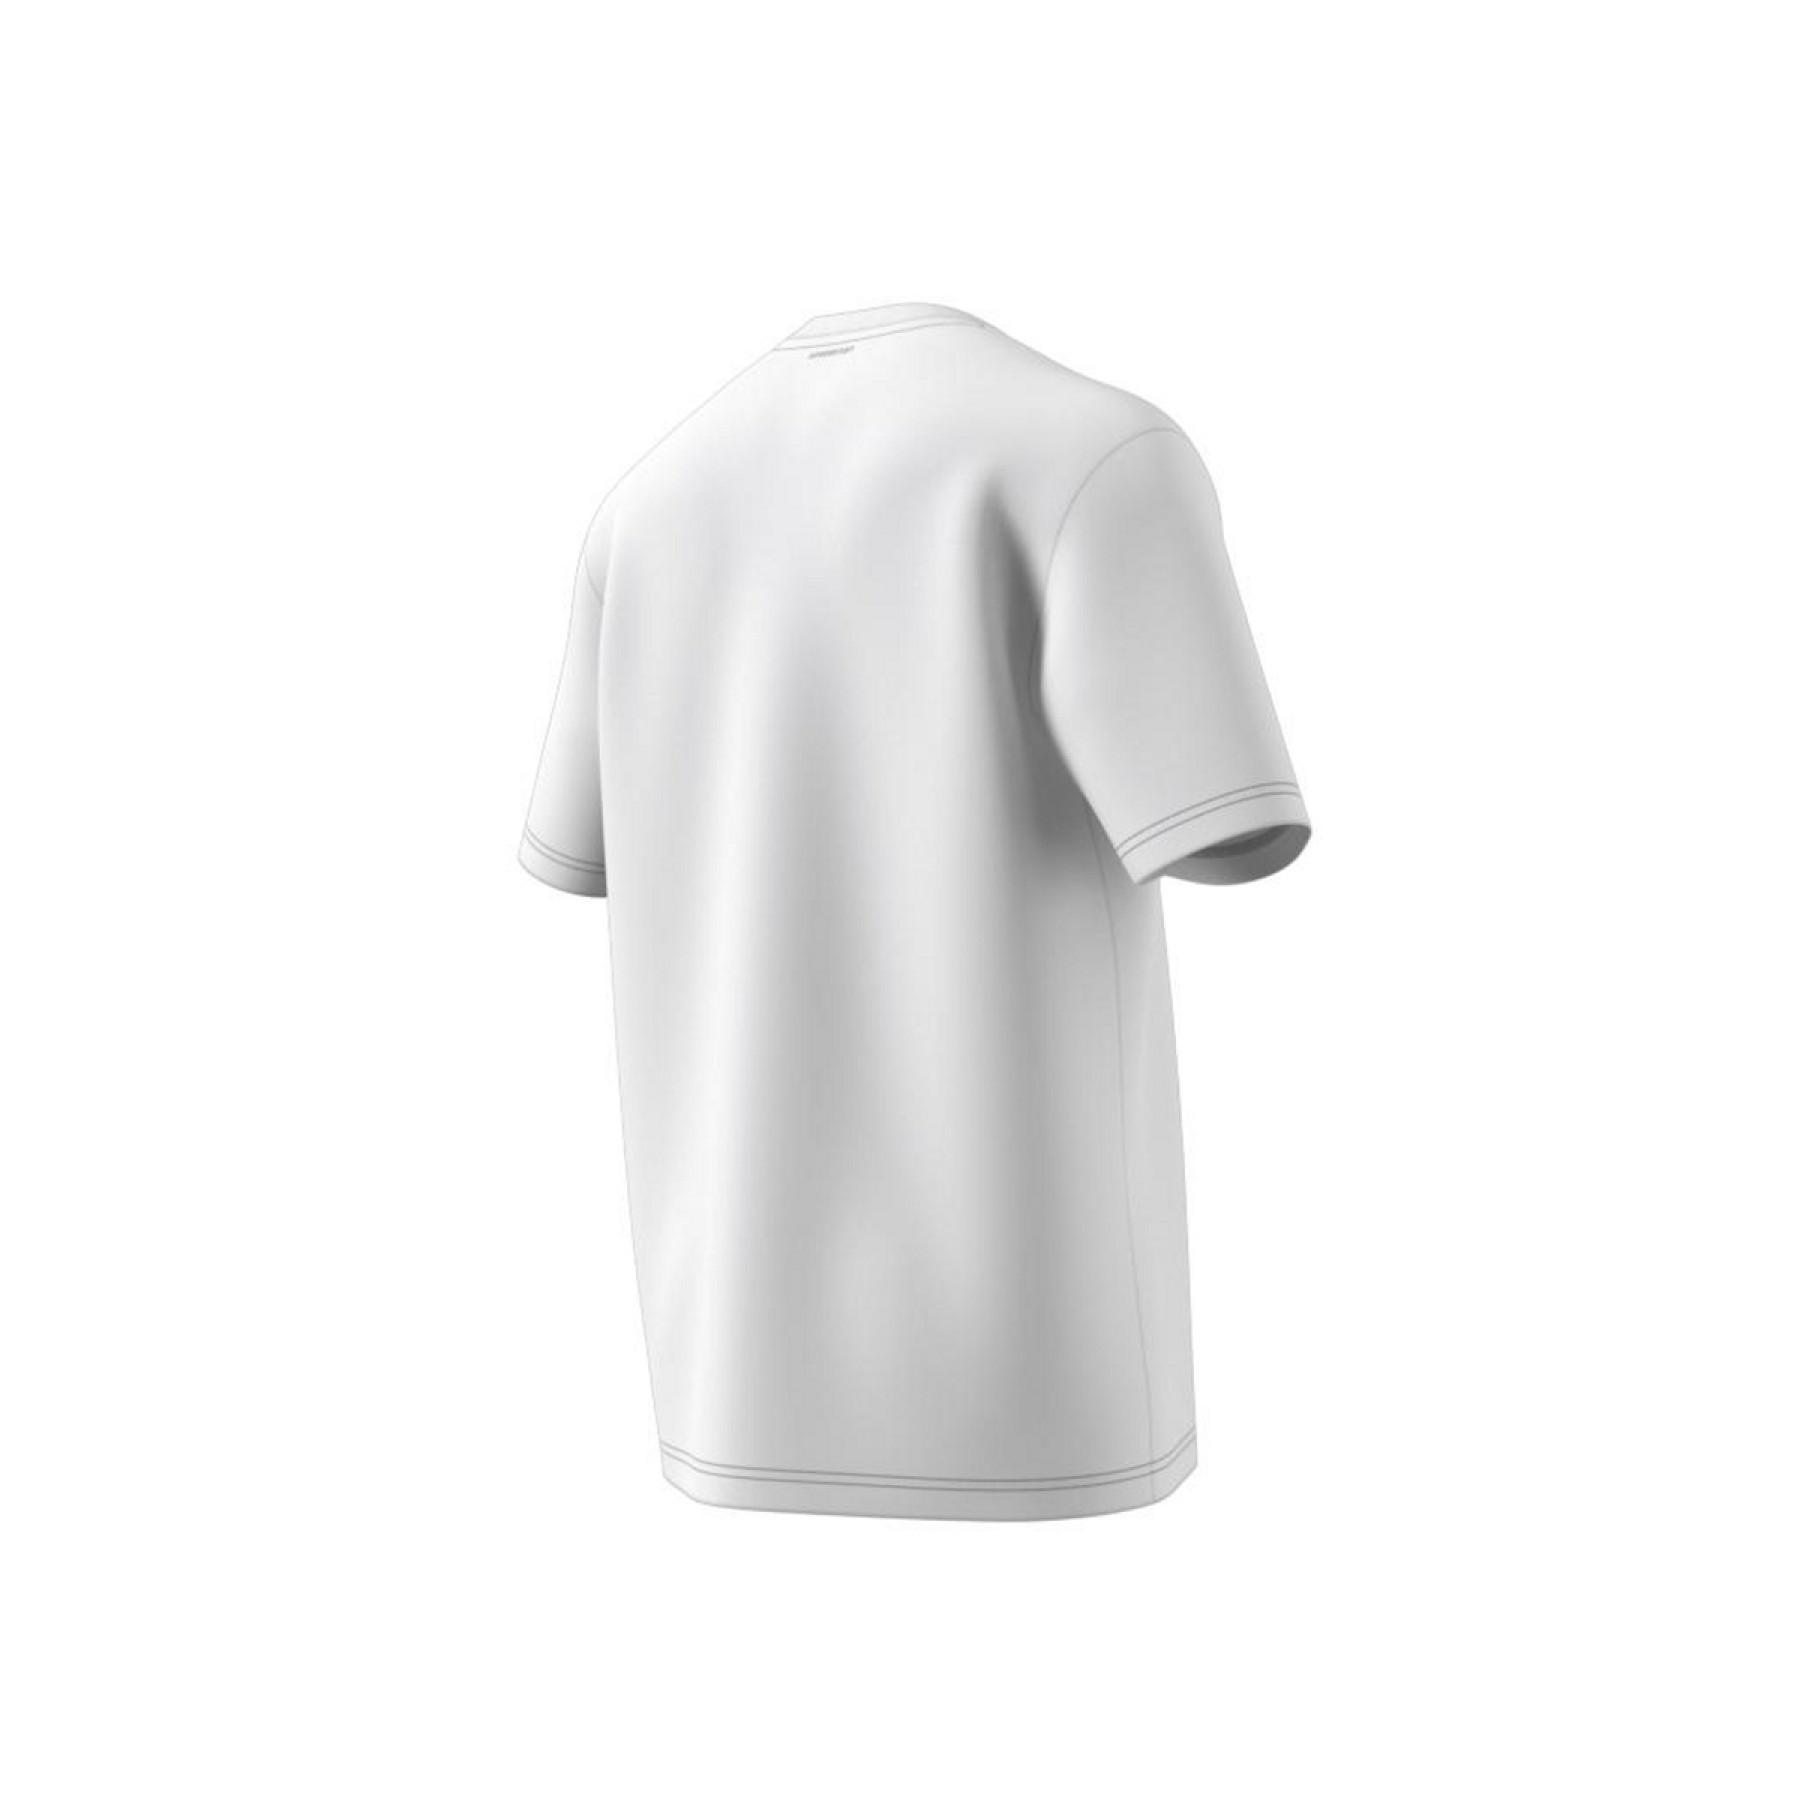 Camiseta adidas Handball Graphic